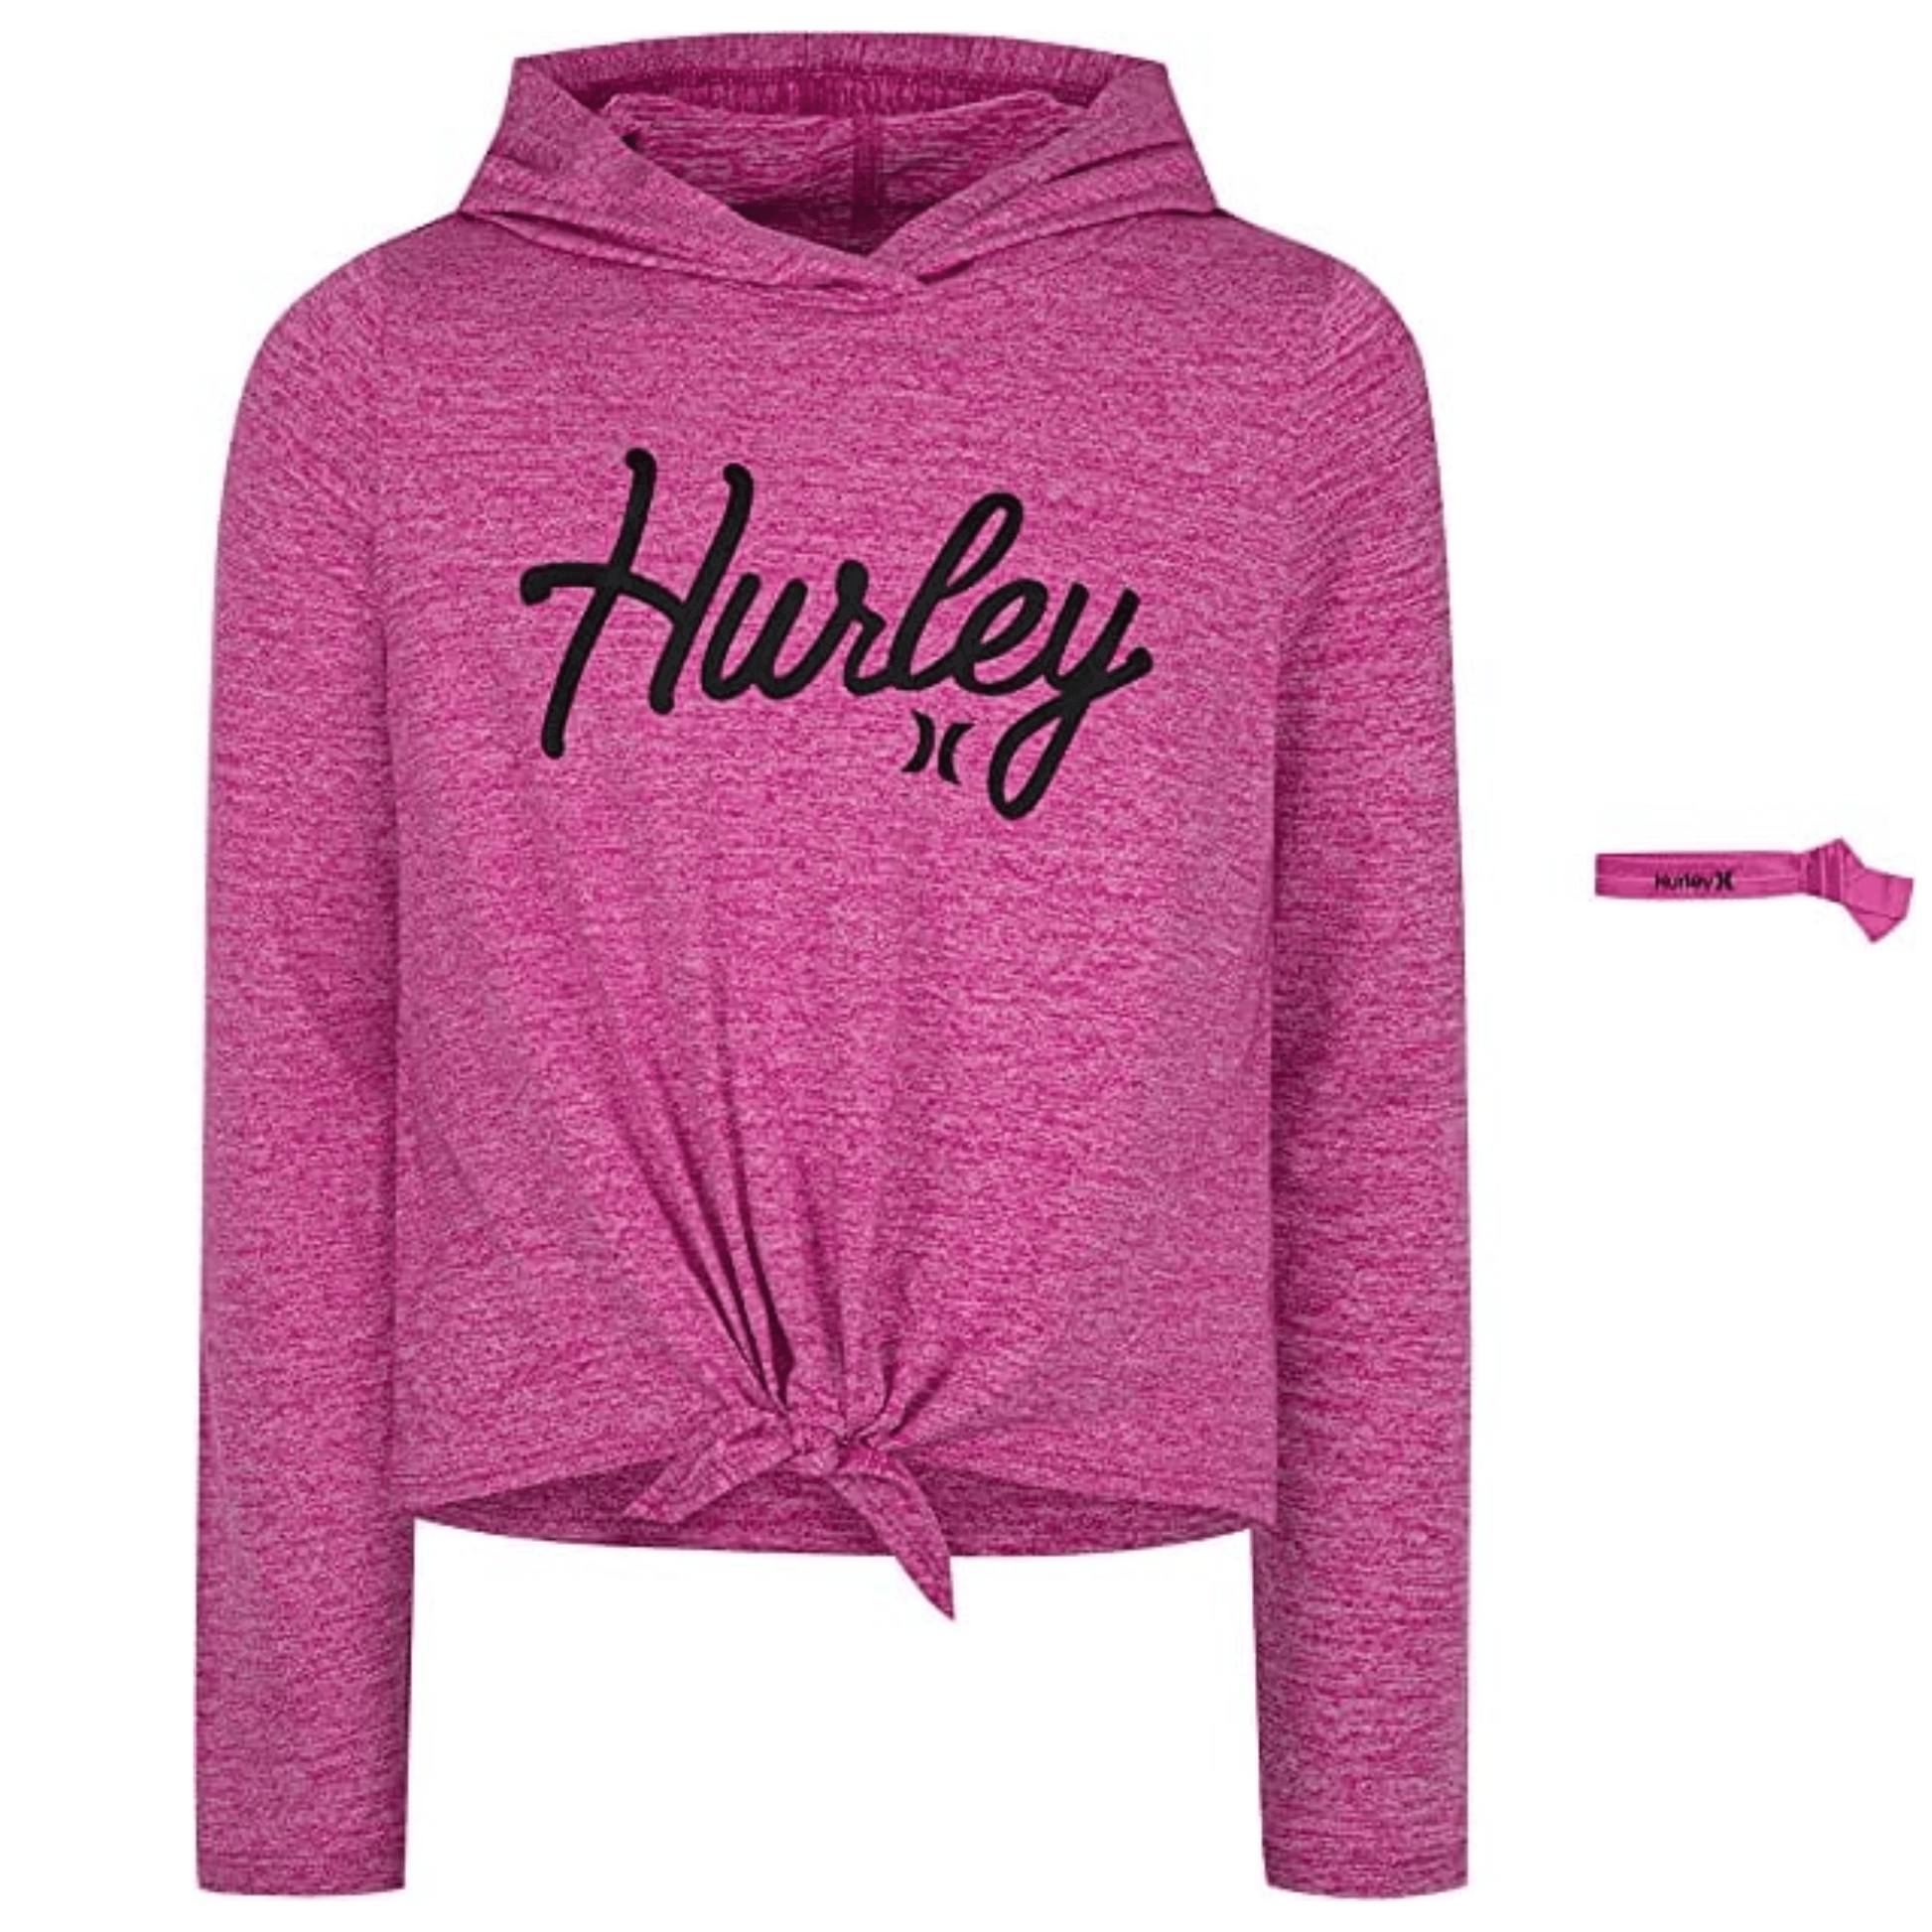 HURLEY Girls Tops S / Pink HURLEY -Kids -Long Sleeve Hooded Top